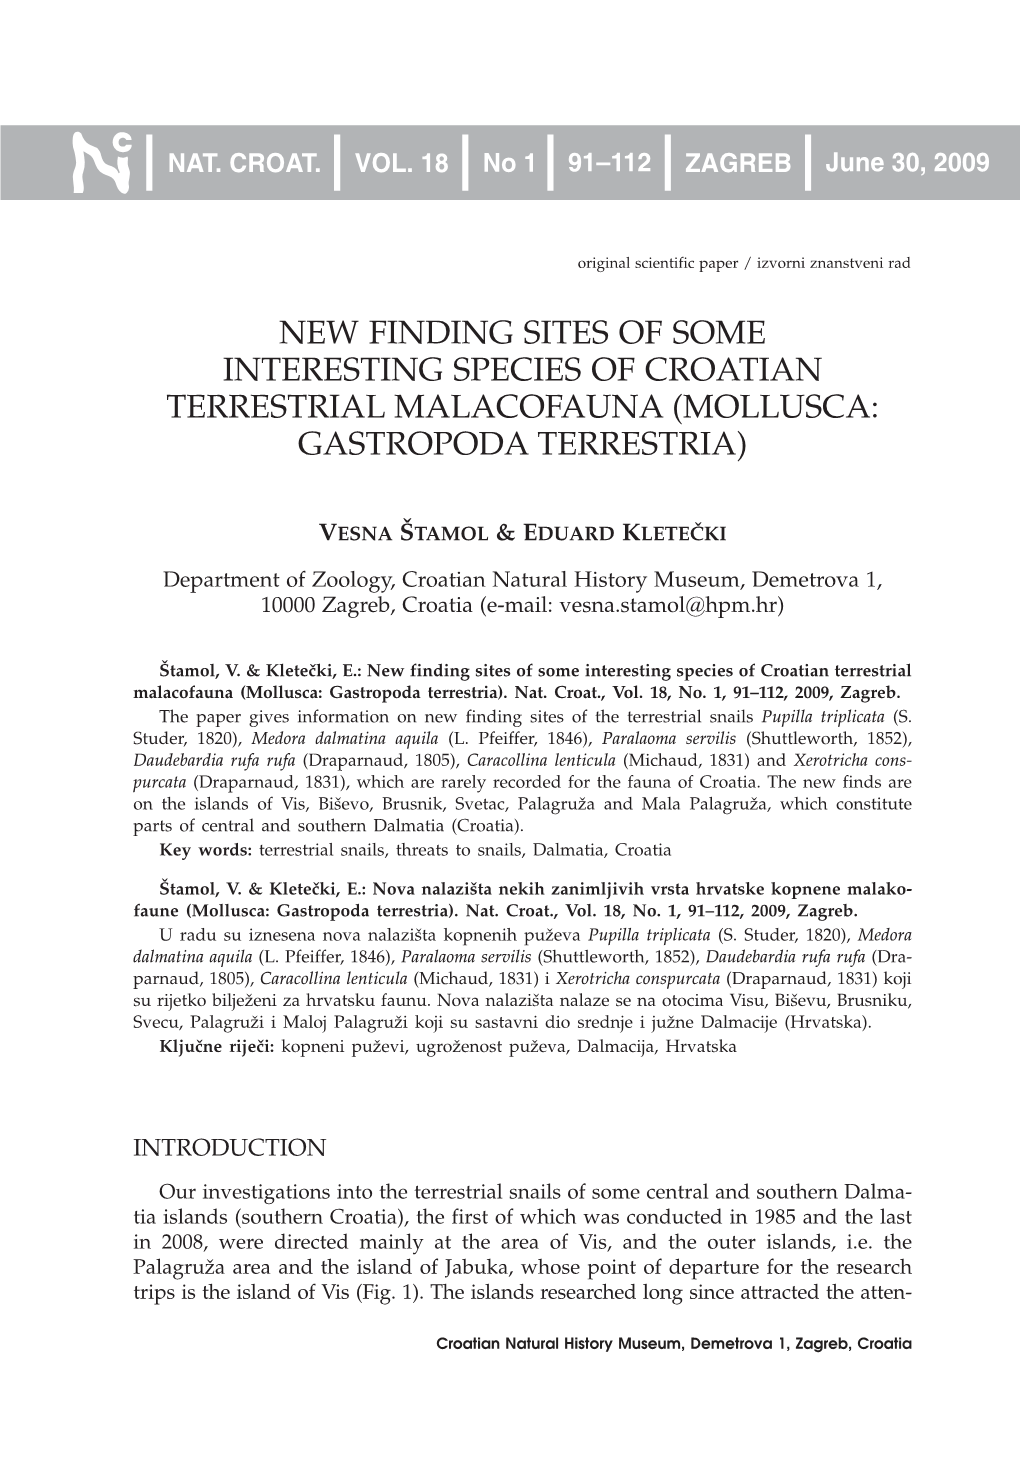 New Finding Sites of Some Interesting Species of Croatian Terrestrial Malacofauna (Mollusca: Gastropoda Terrestria)